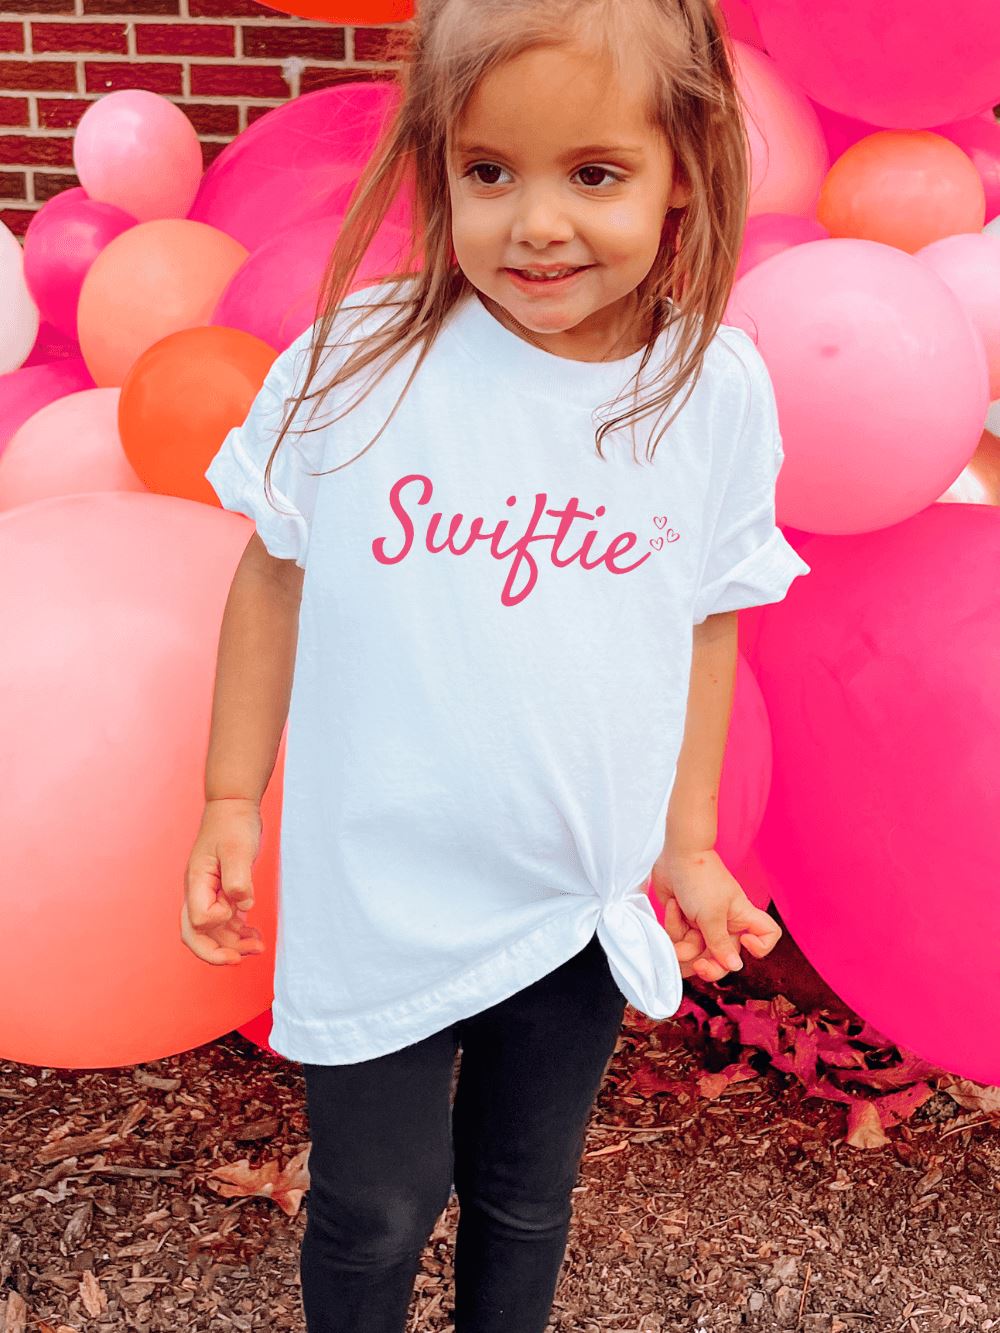 Swiftie Girls' Cotton Rock Star Era T-Shirt - 3 Colors - Sydney So Sweet